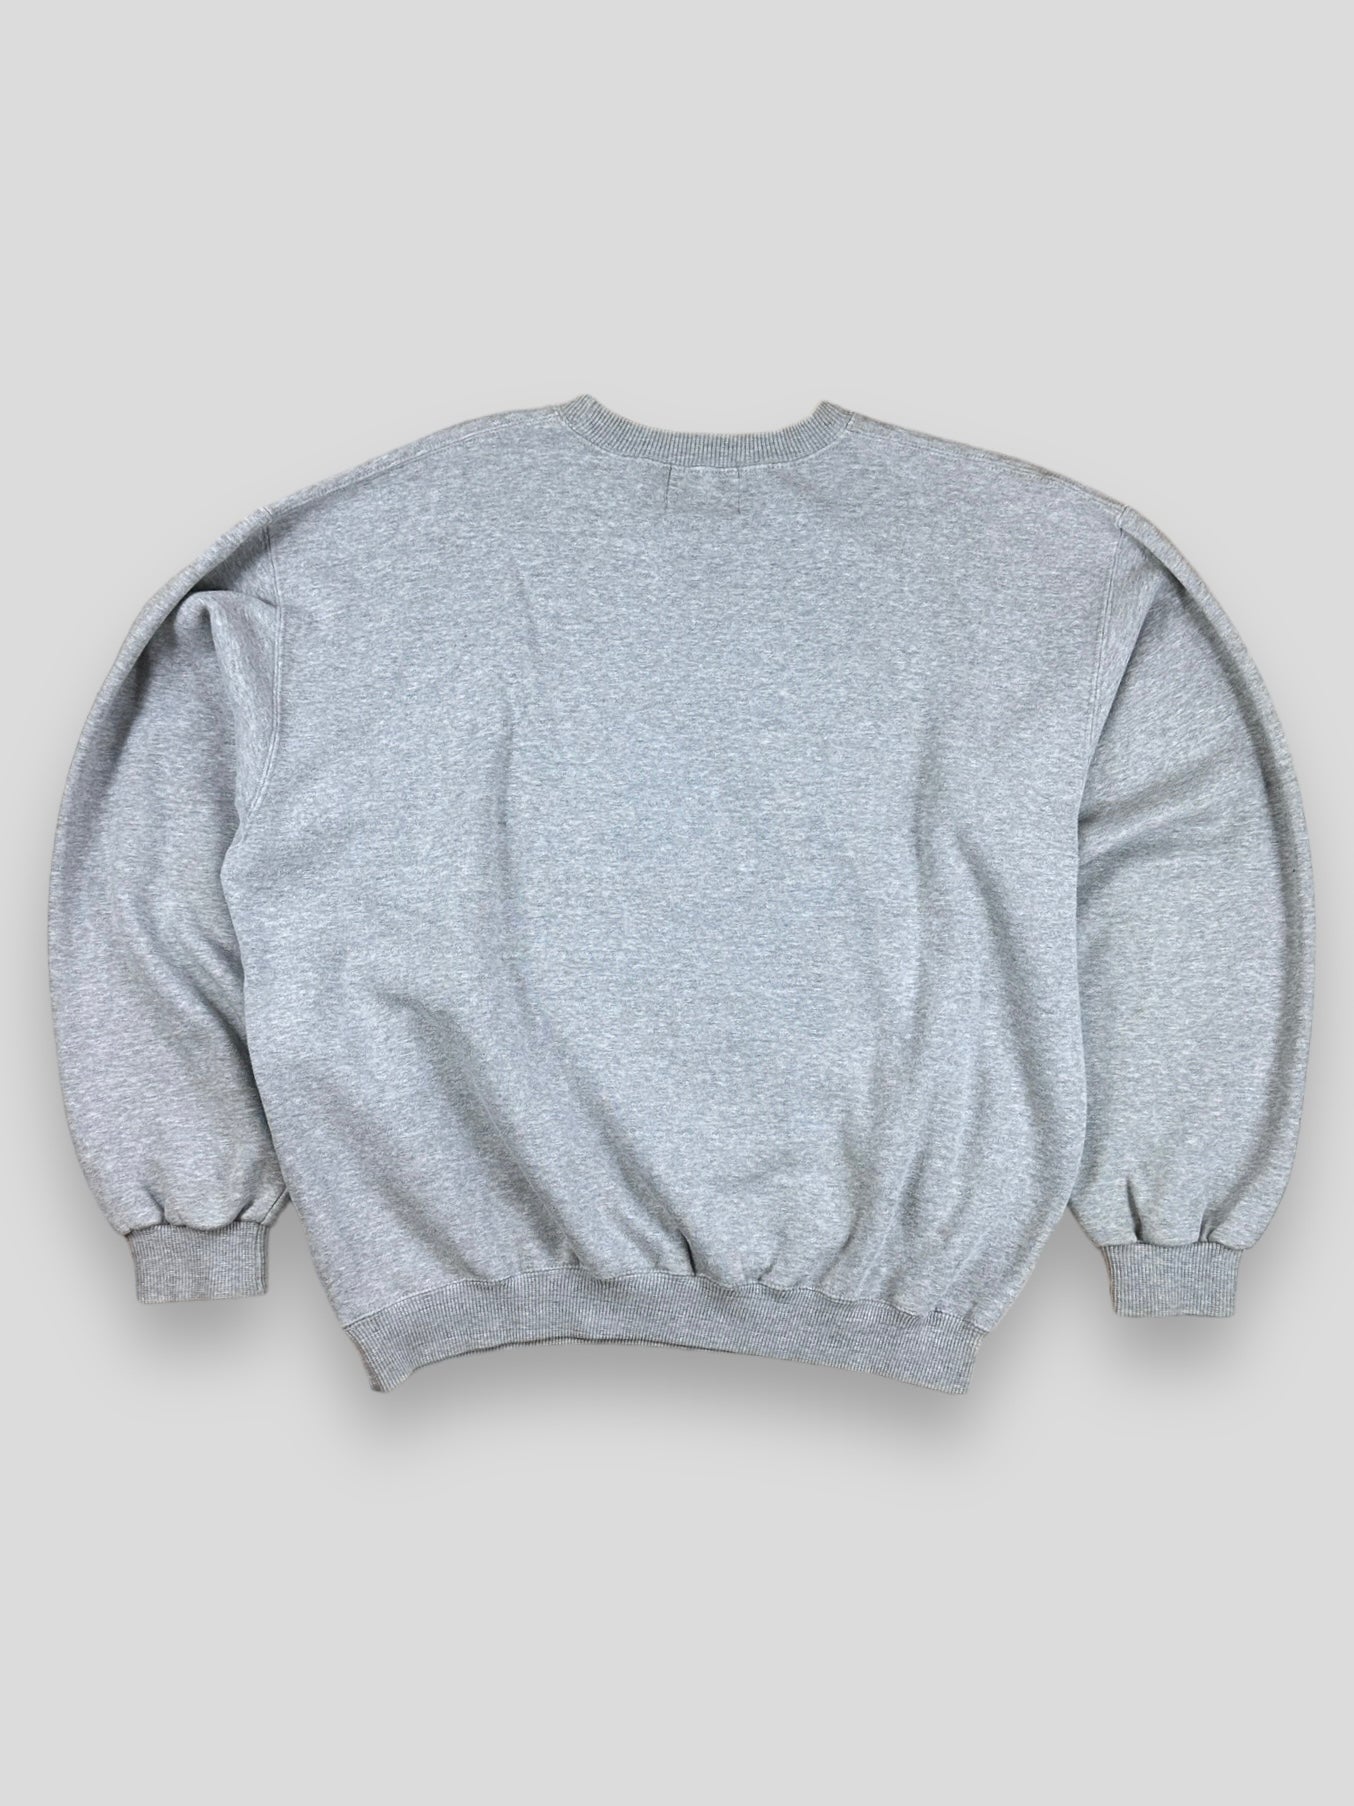 Vintage guess grey sweatshirt